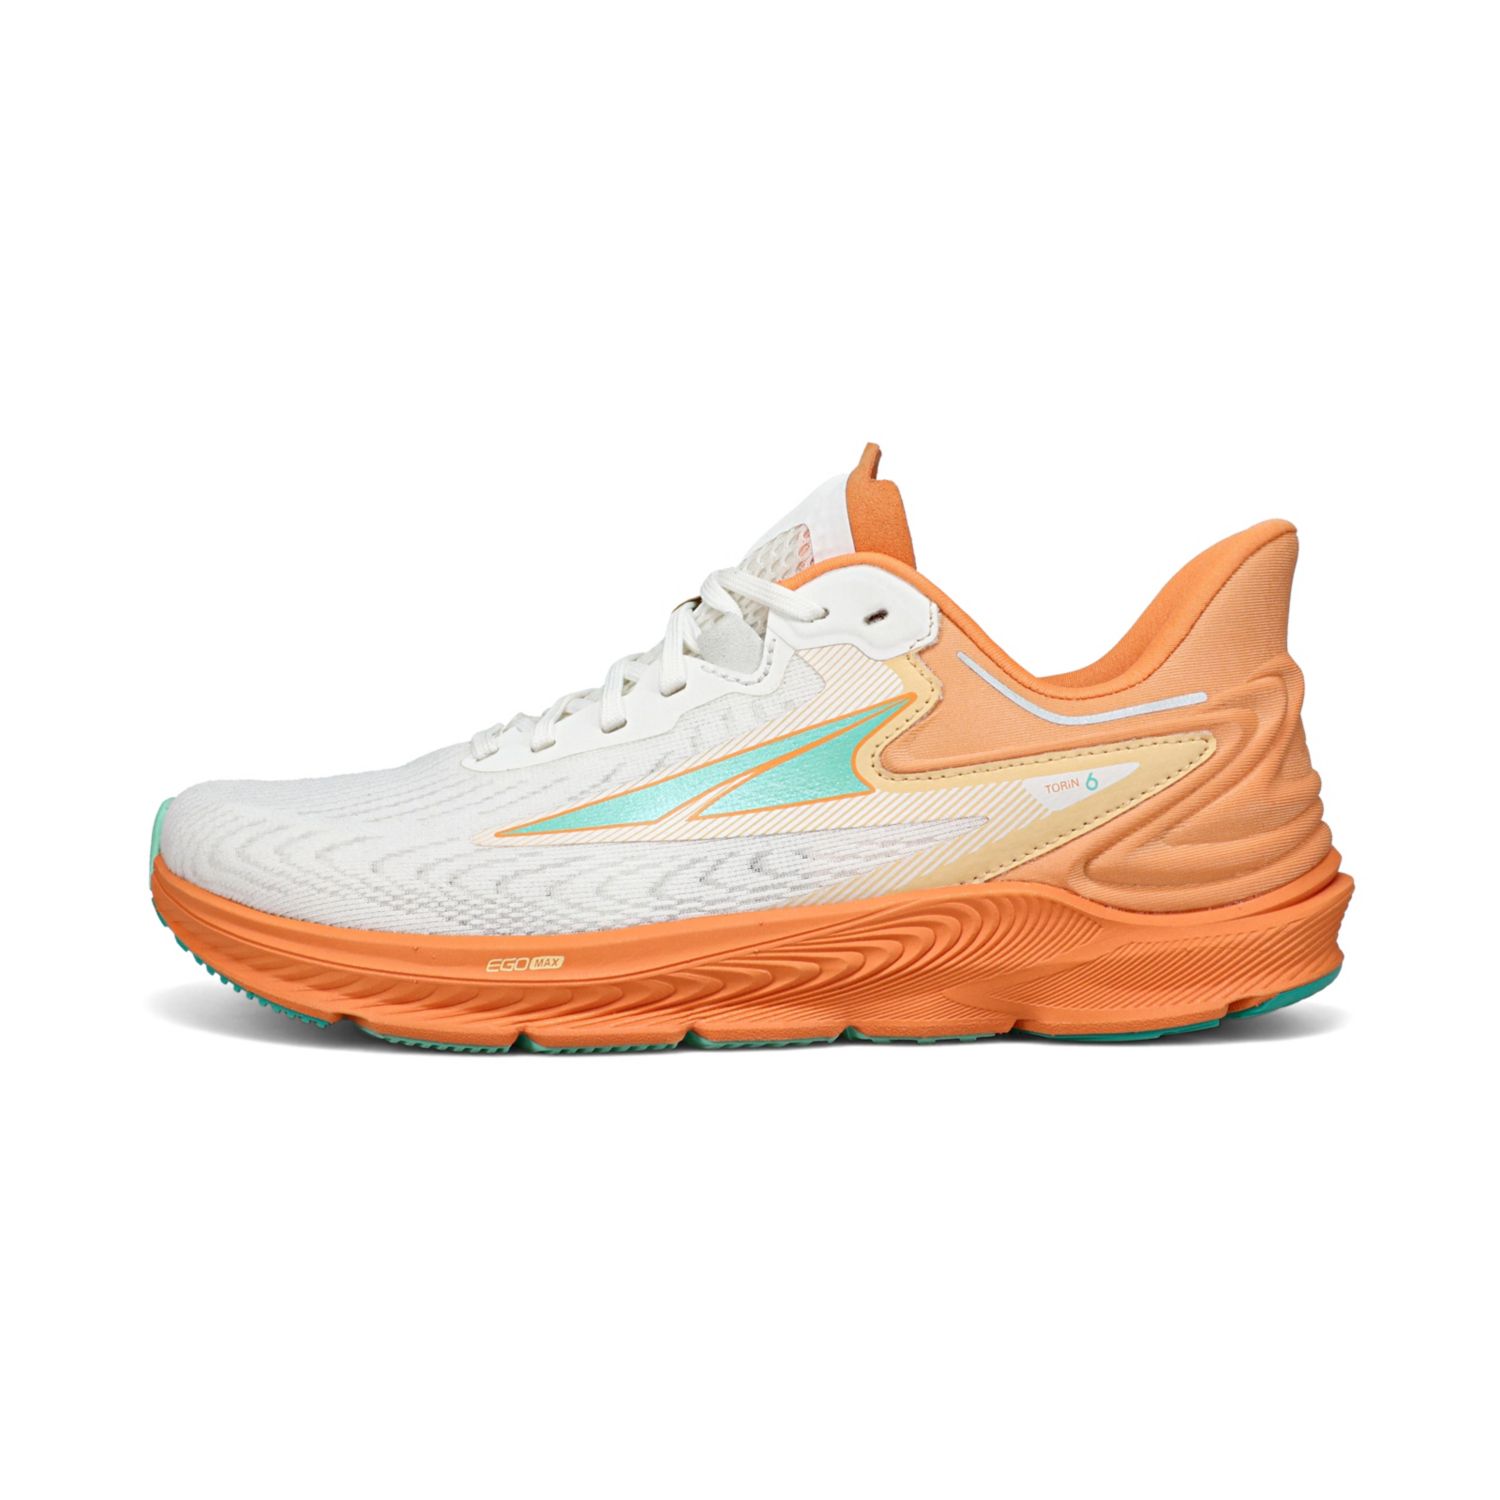 White / Orange Altra Torin 6 Women's Road Running Shoes | KSA-14736809